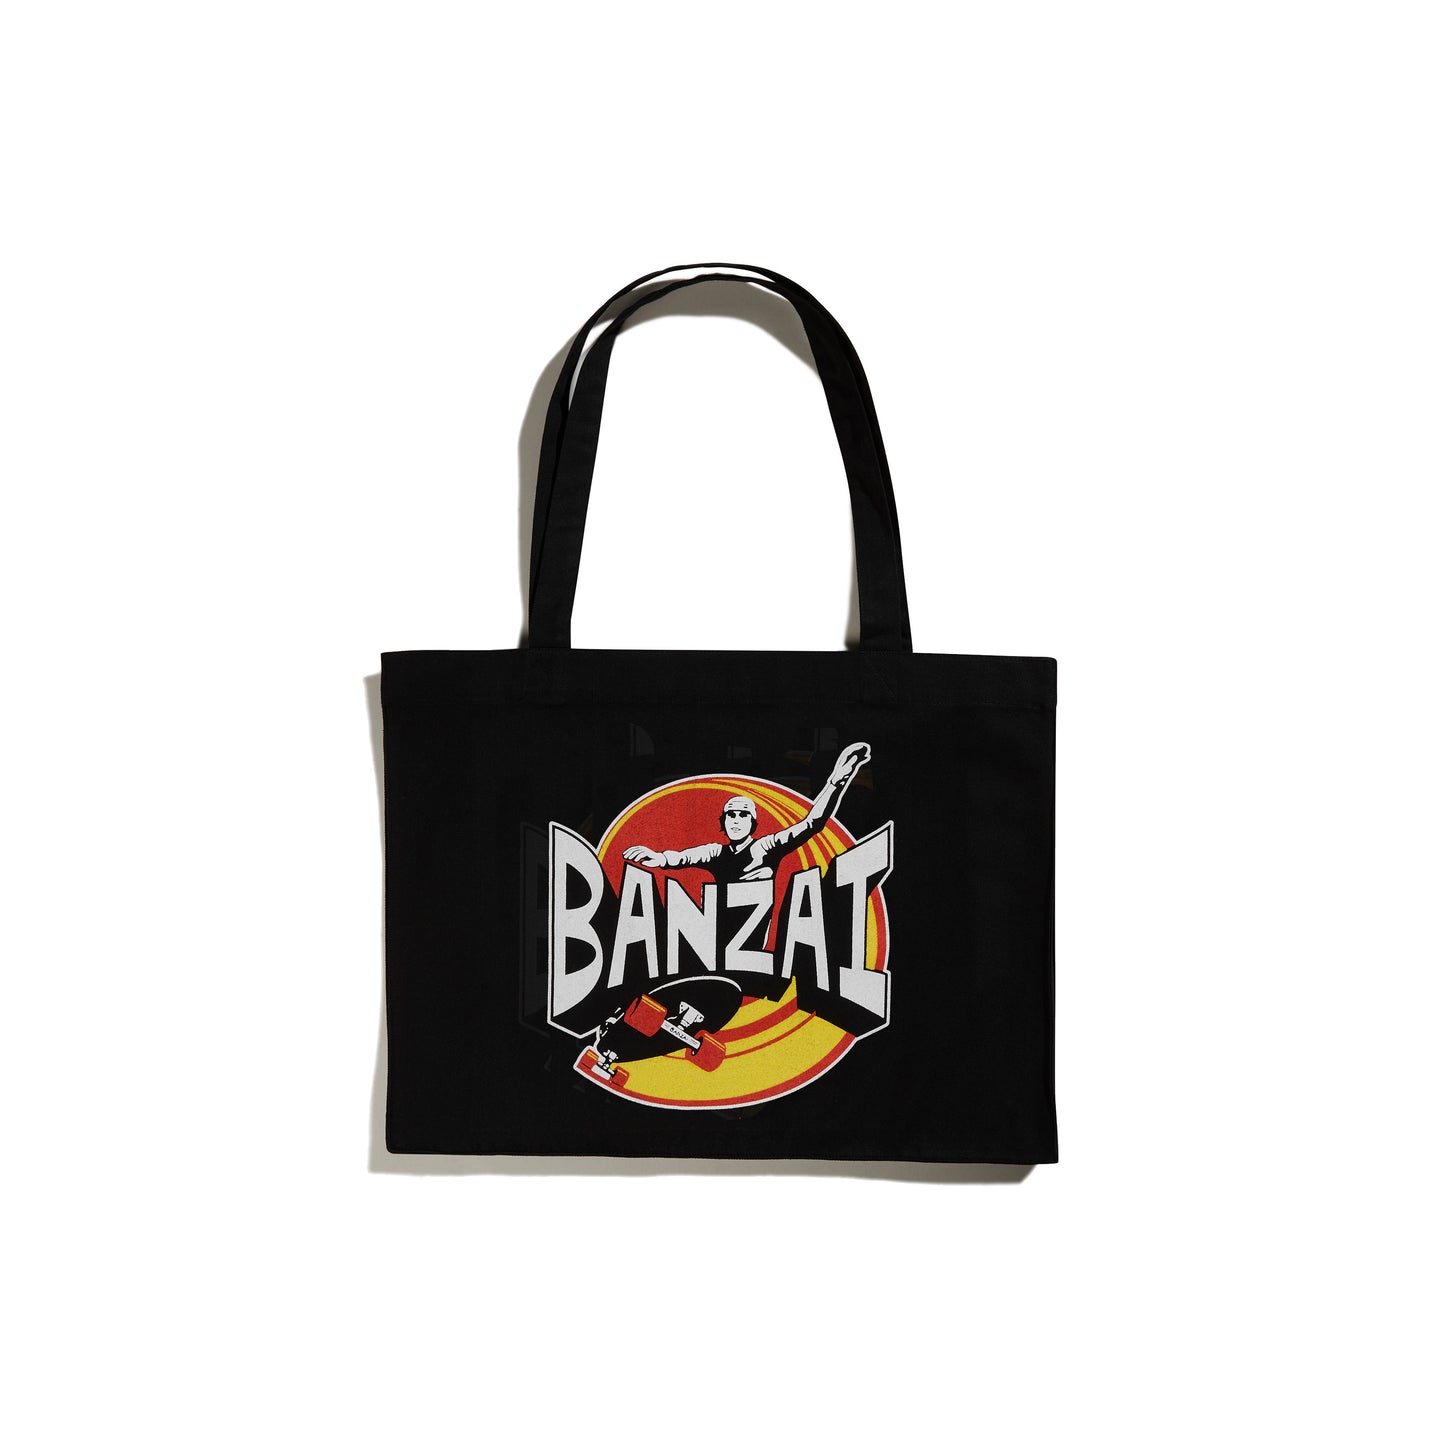 Banzai / Heritage Bag